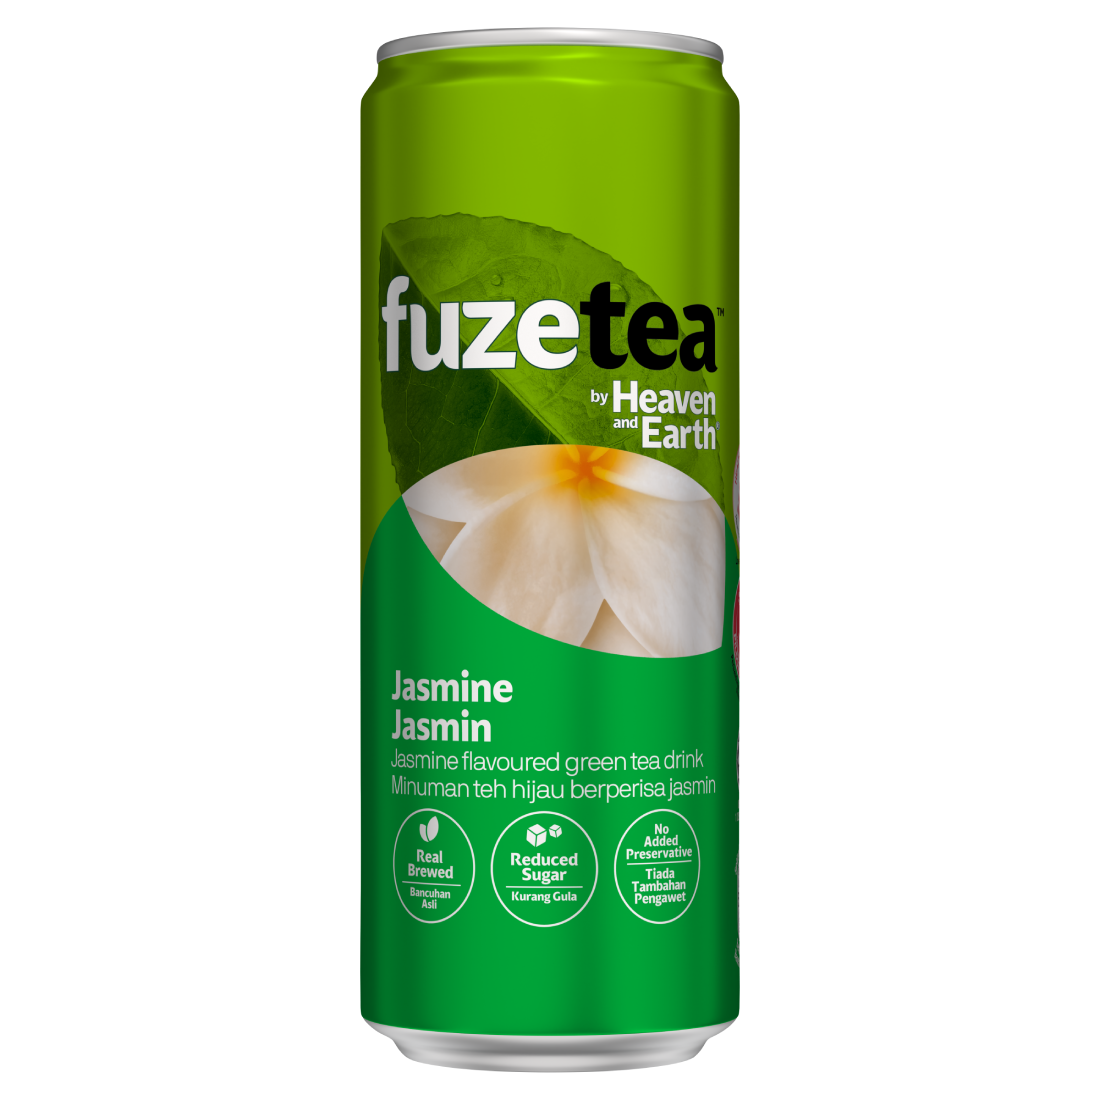 Fuze Tea Jasmine Green Tea can